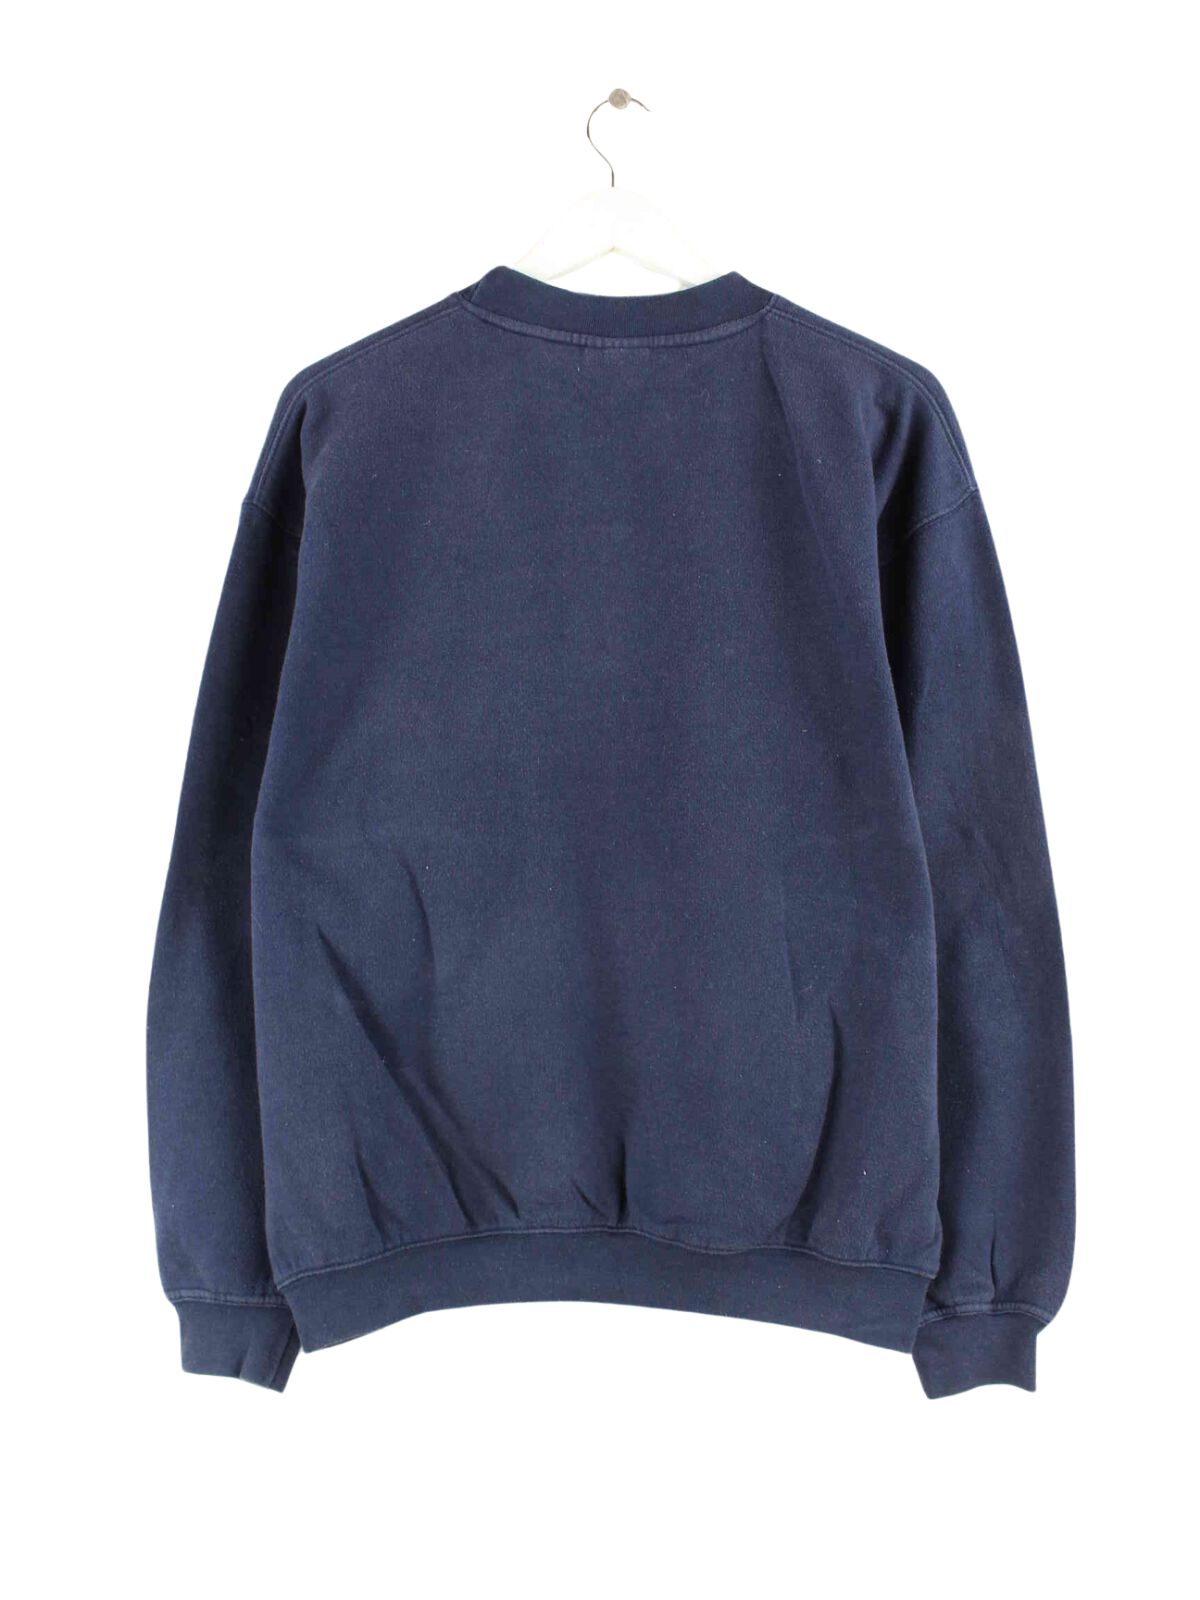 Reebok y2k Embroidered Sweater Blau M (back image)